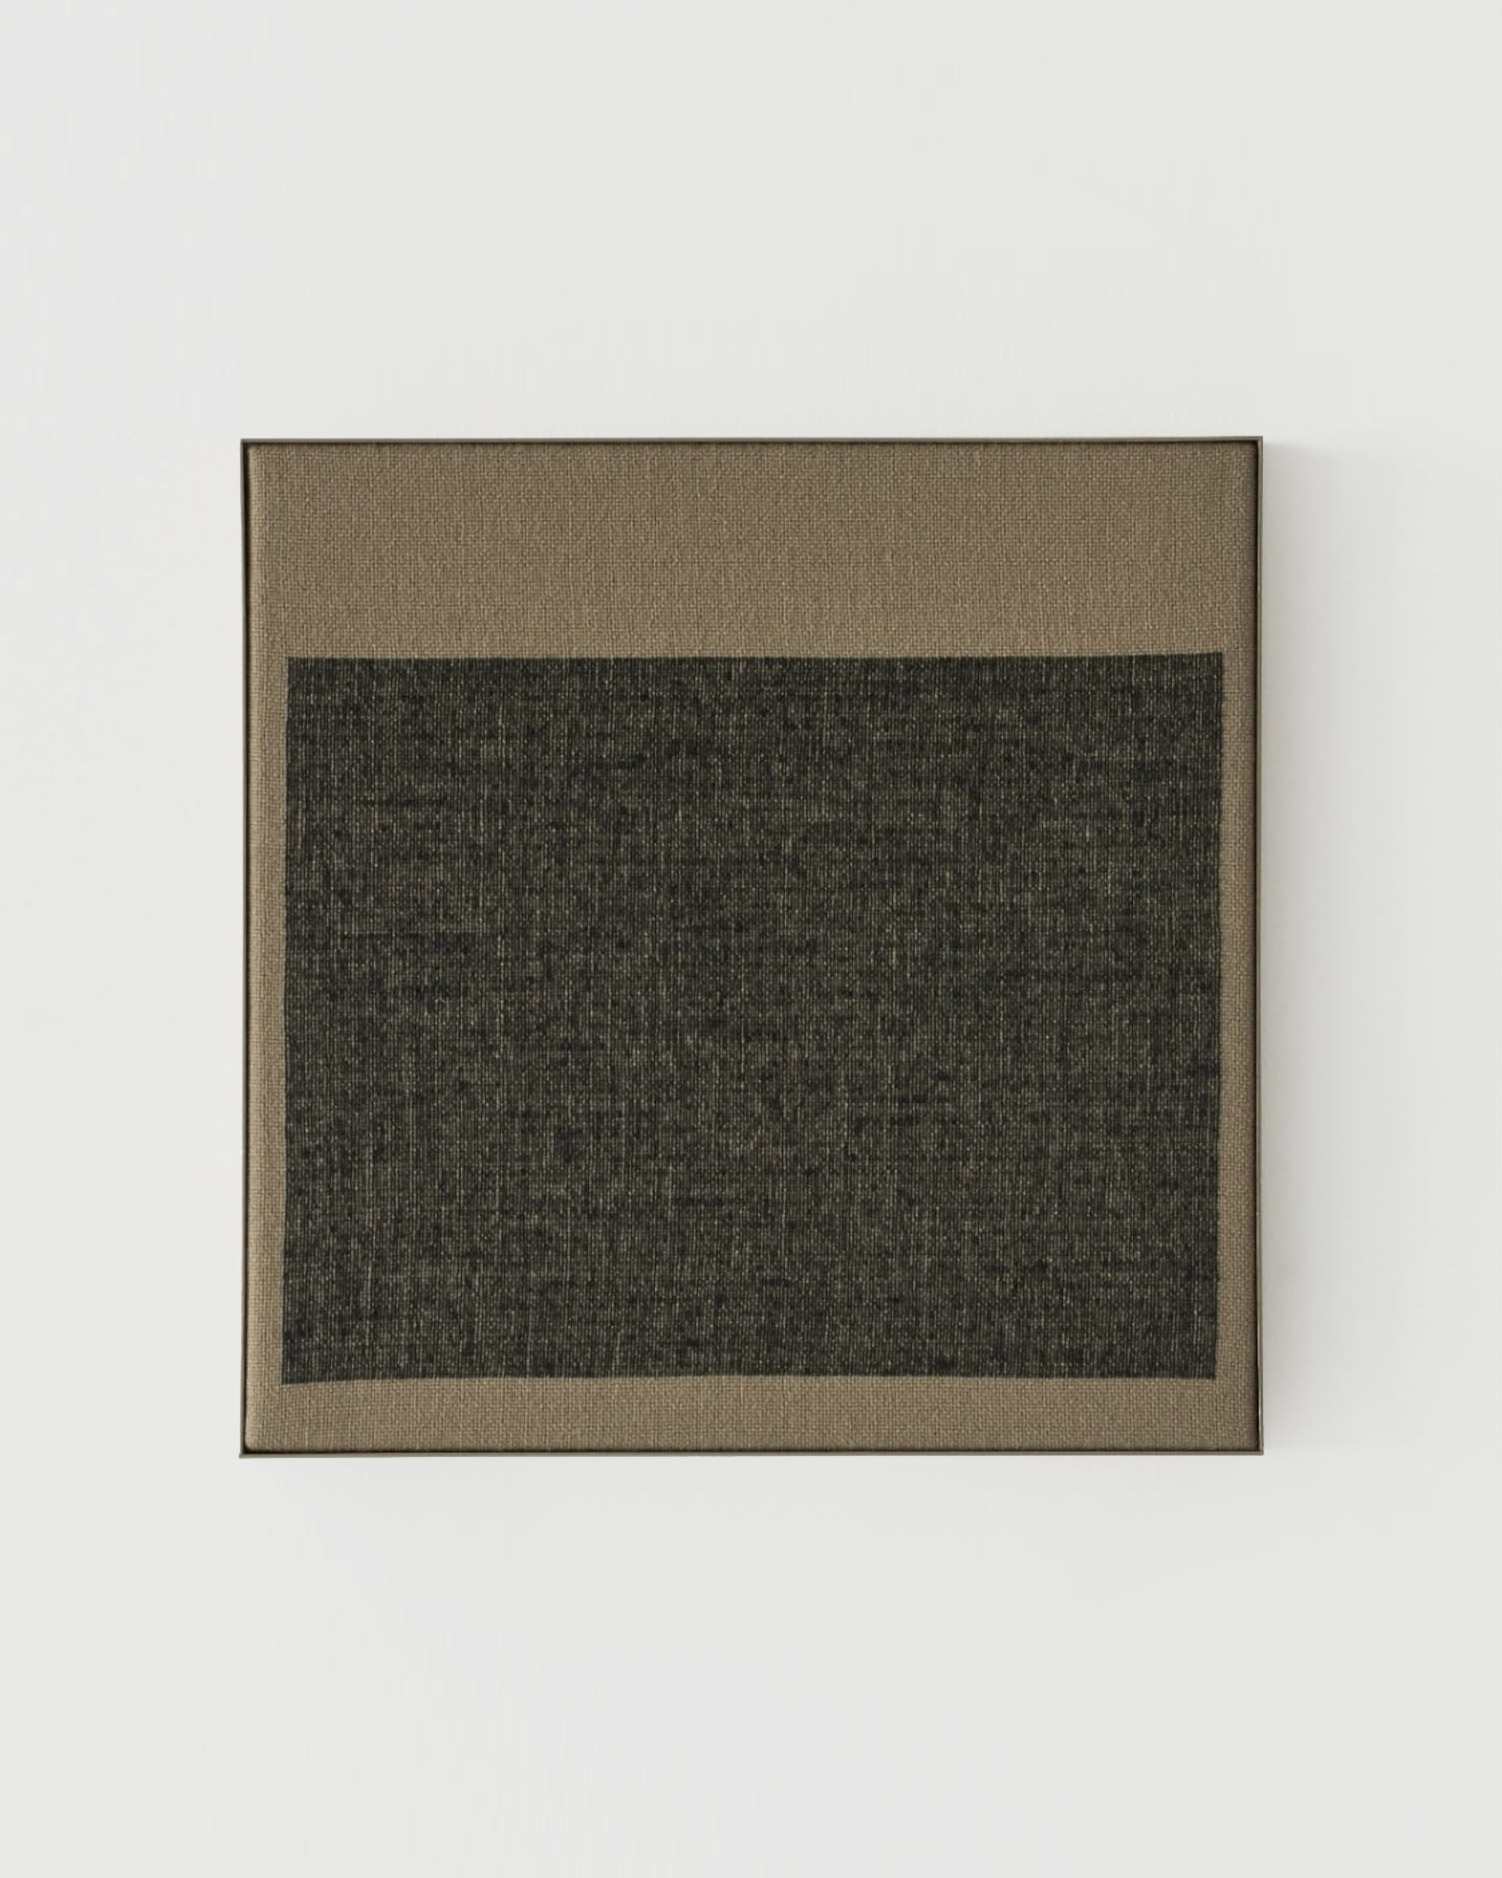 Chris Liljenberg Halstrøm, Entity 25.220 / 2021, 50x50 cm, Linen-cotton thread on wool